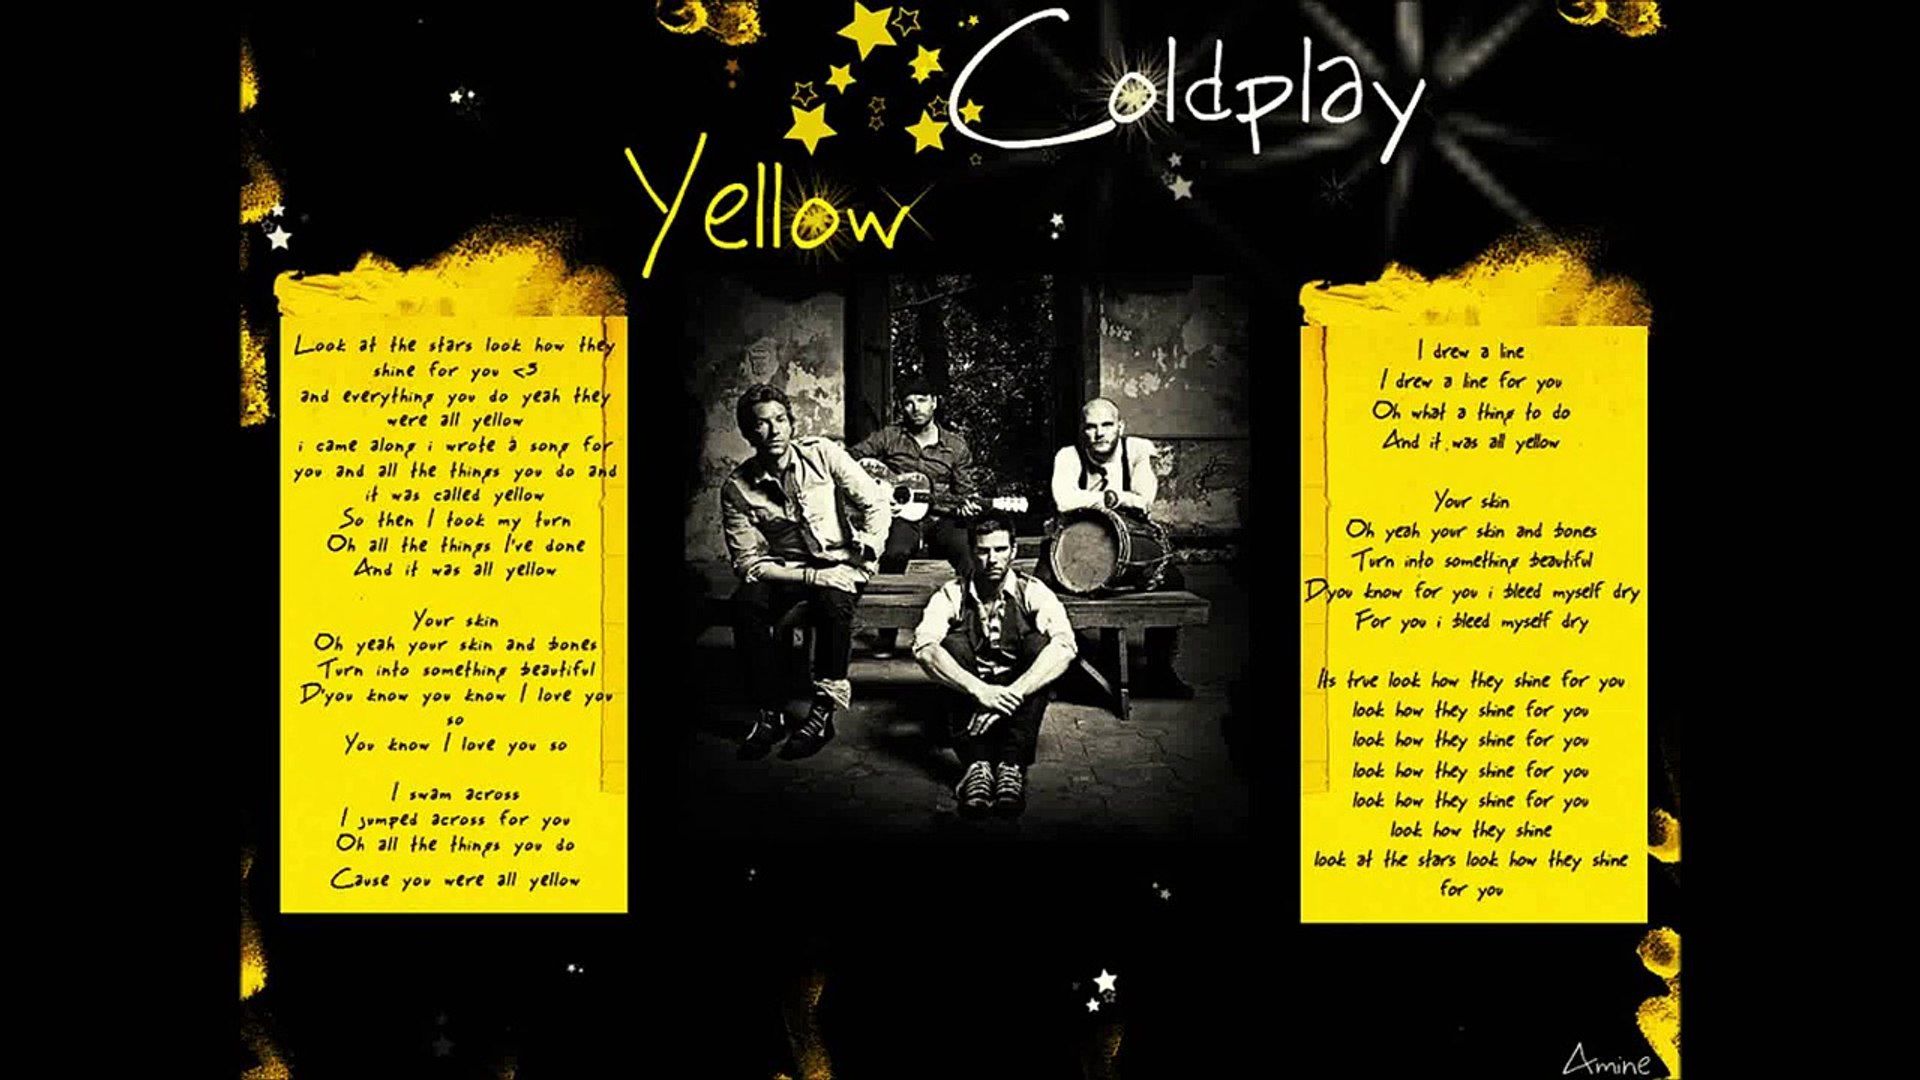 Yellow By Coldplay Lyrics